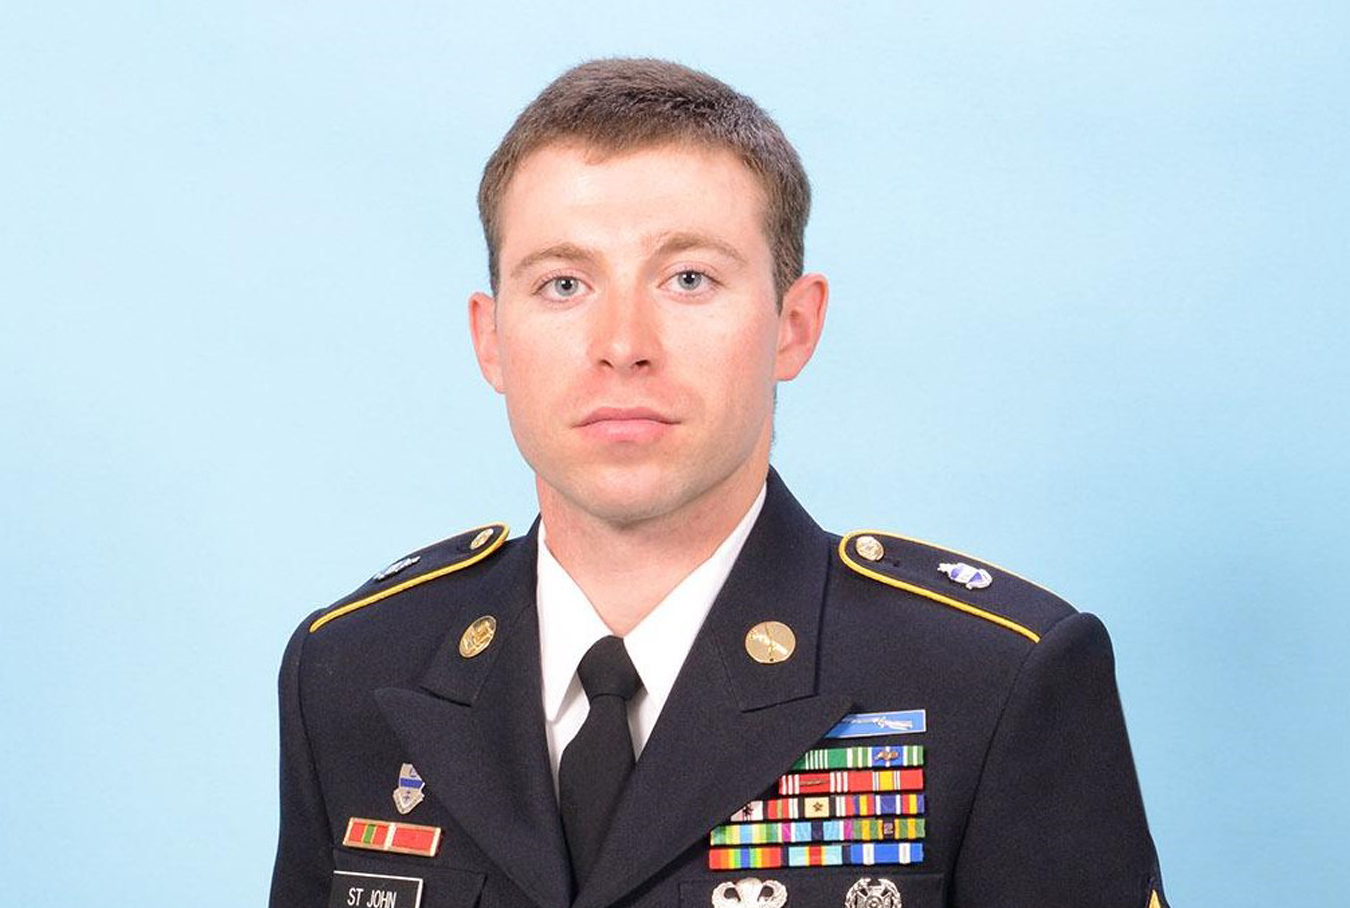 Staff Sgt. Andrew Michael St. John, 29, of Greenwood, Indiana.